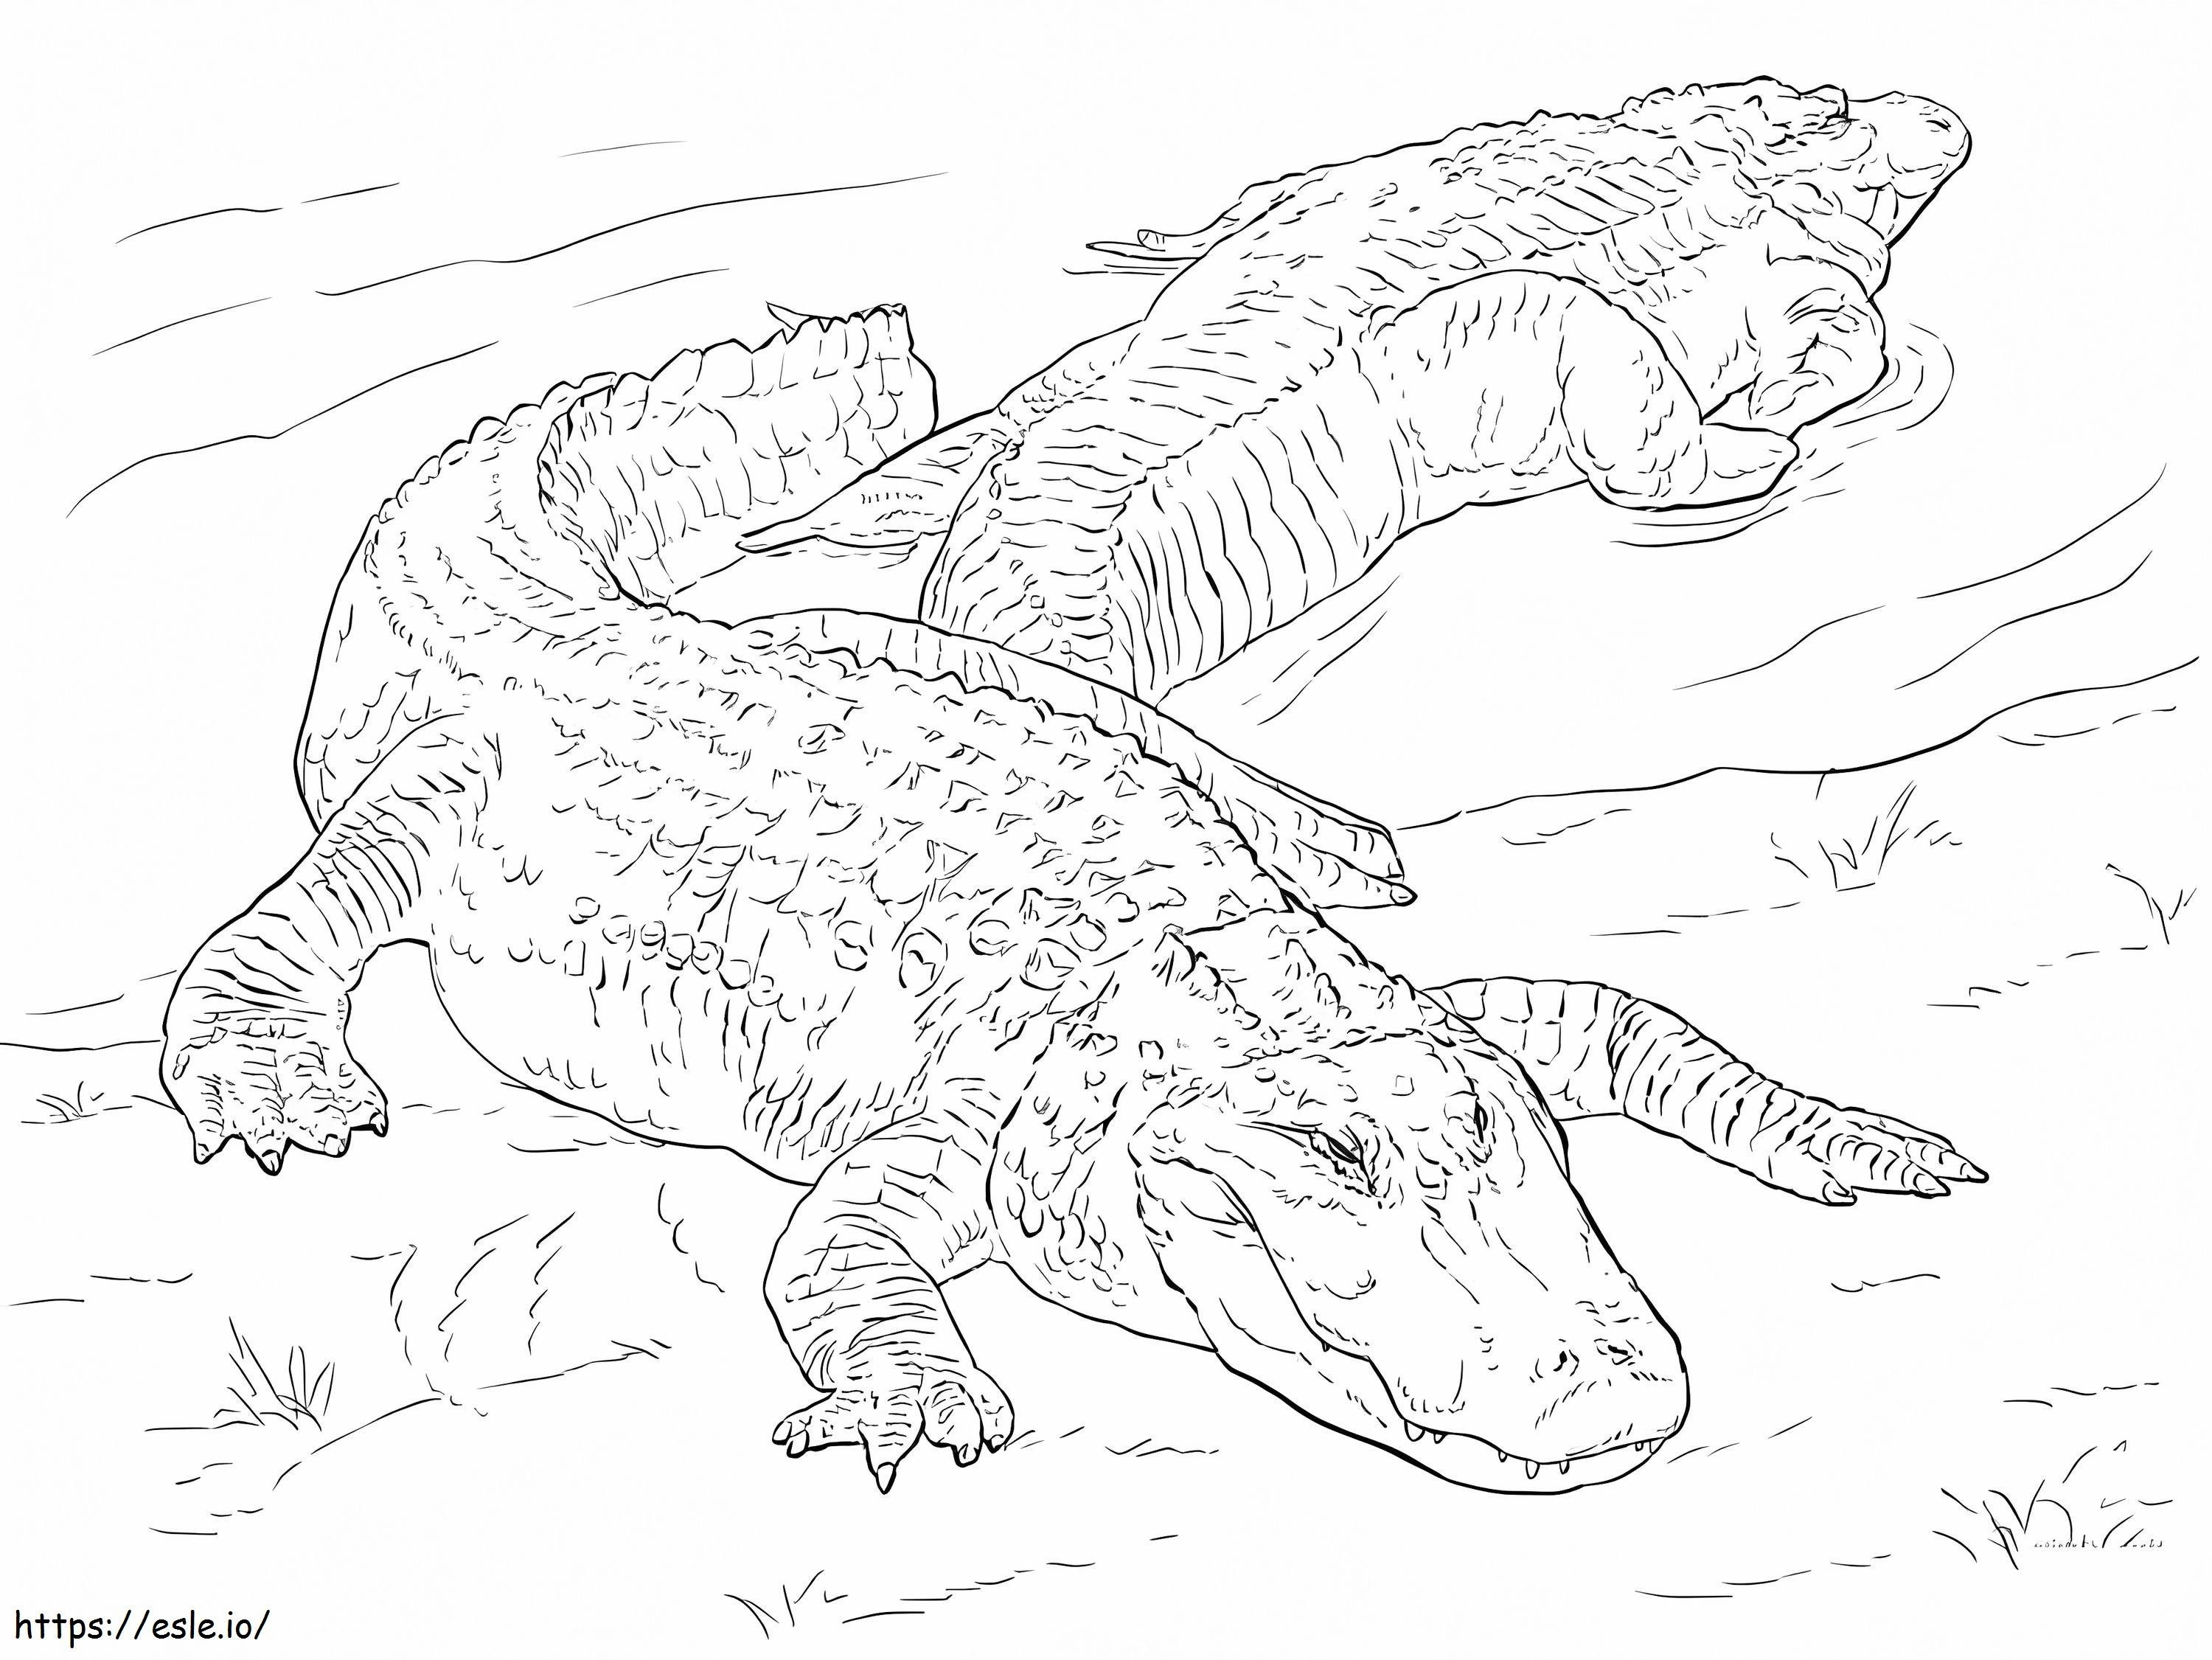 American Alligators coloring page